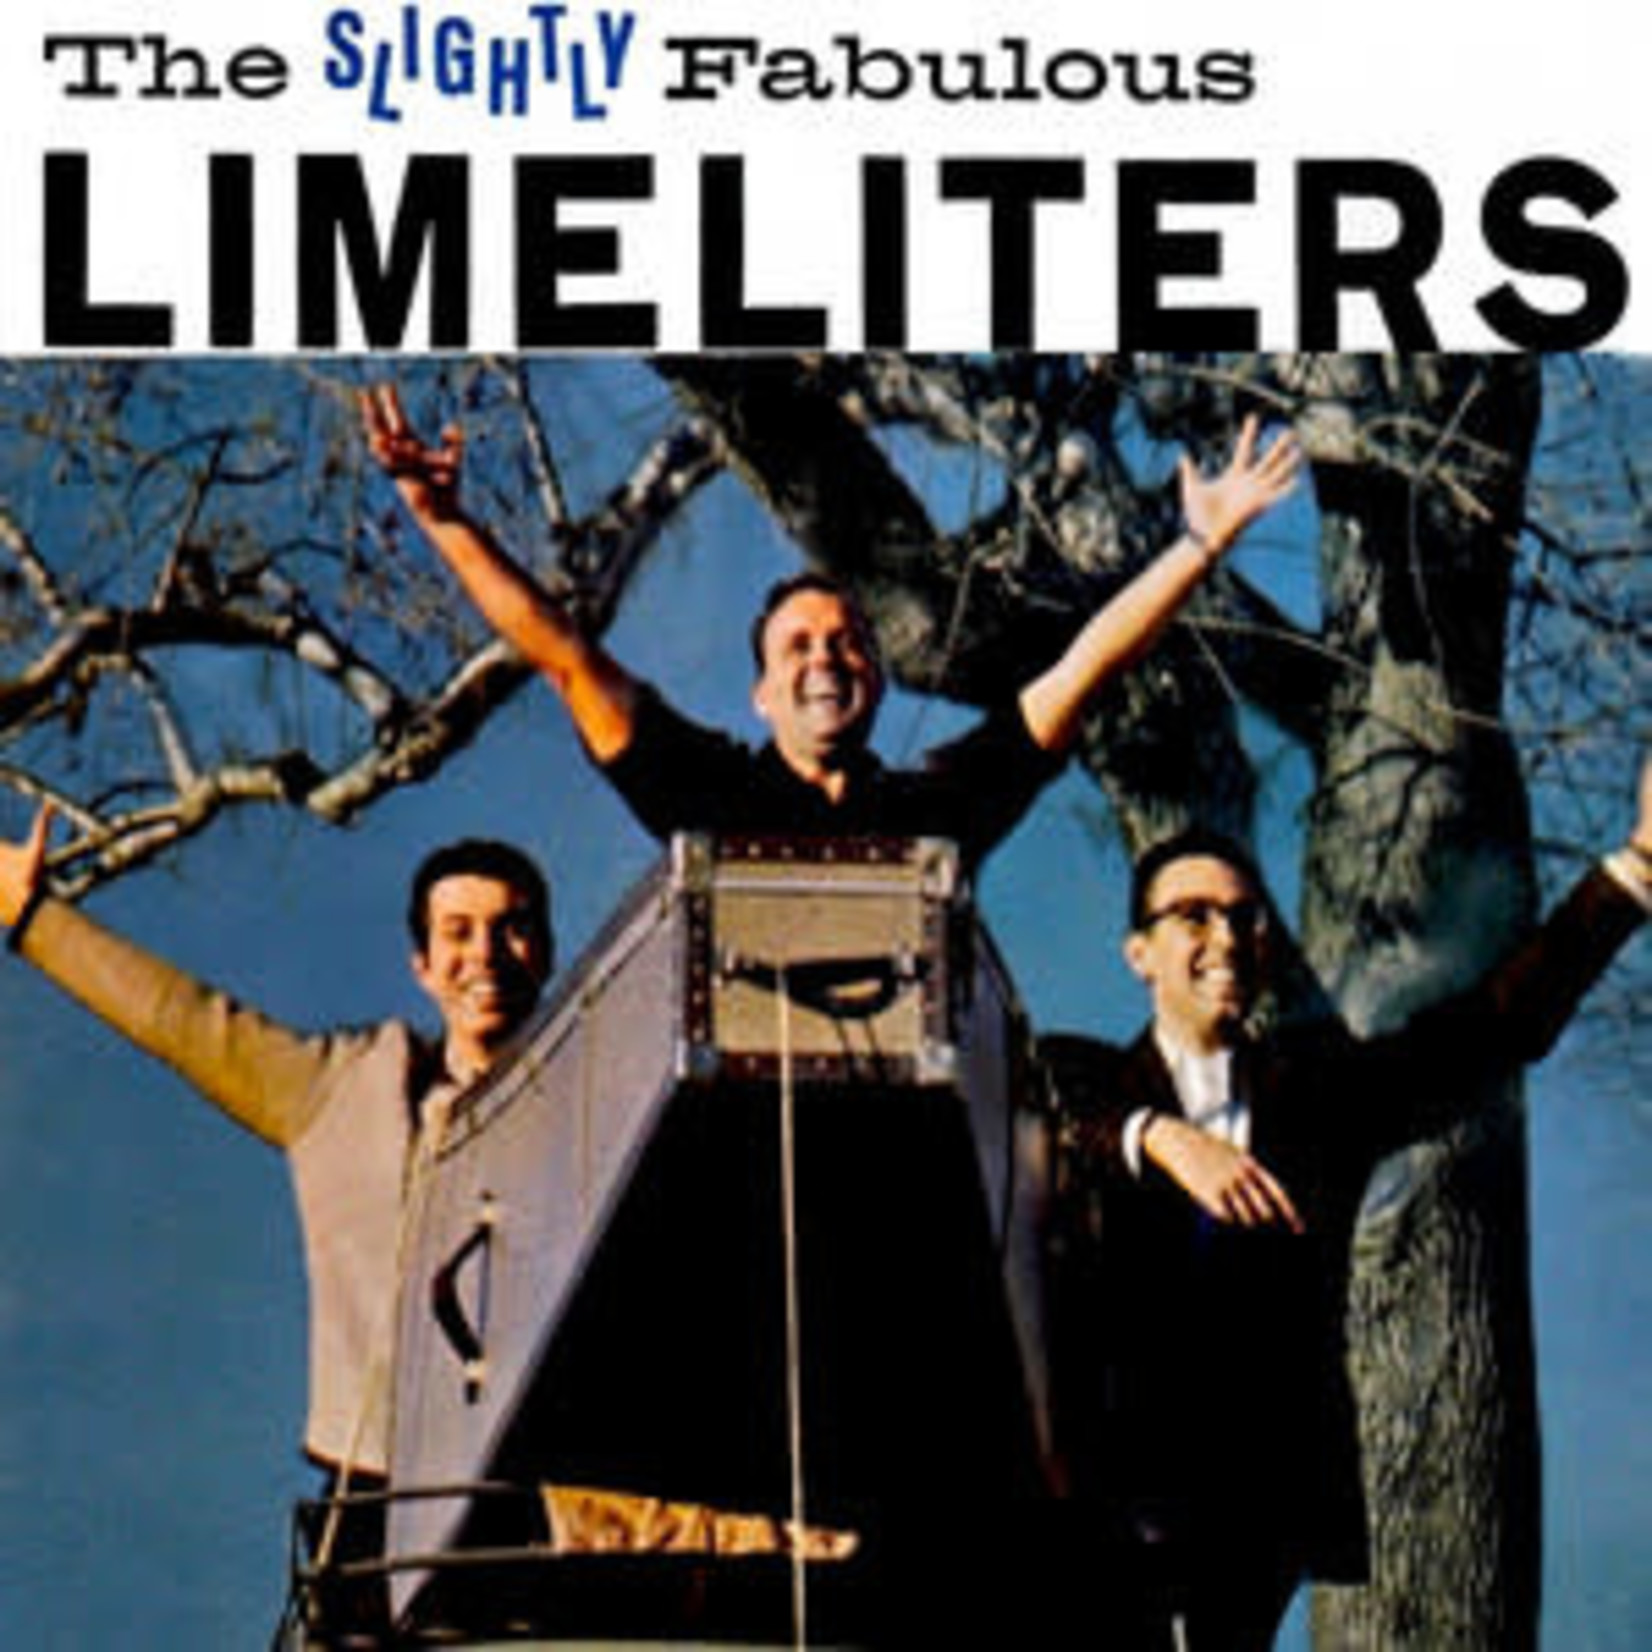 [Vintage] Limeliters - The Slightly Fabulous